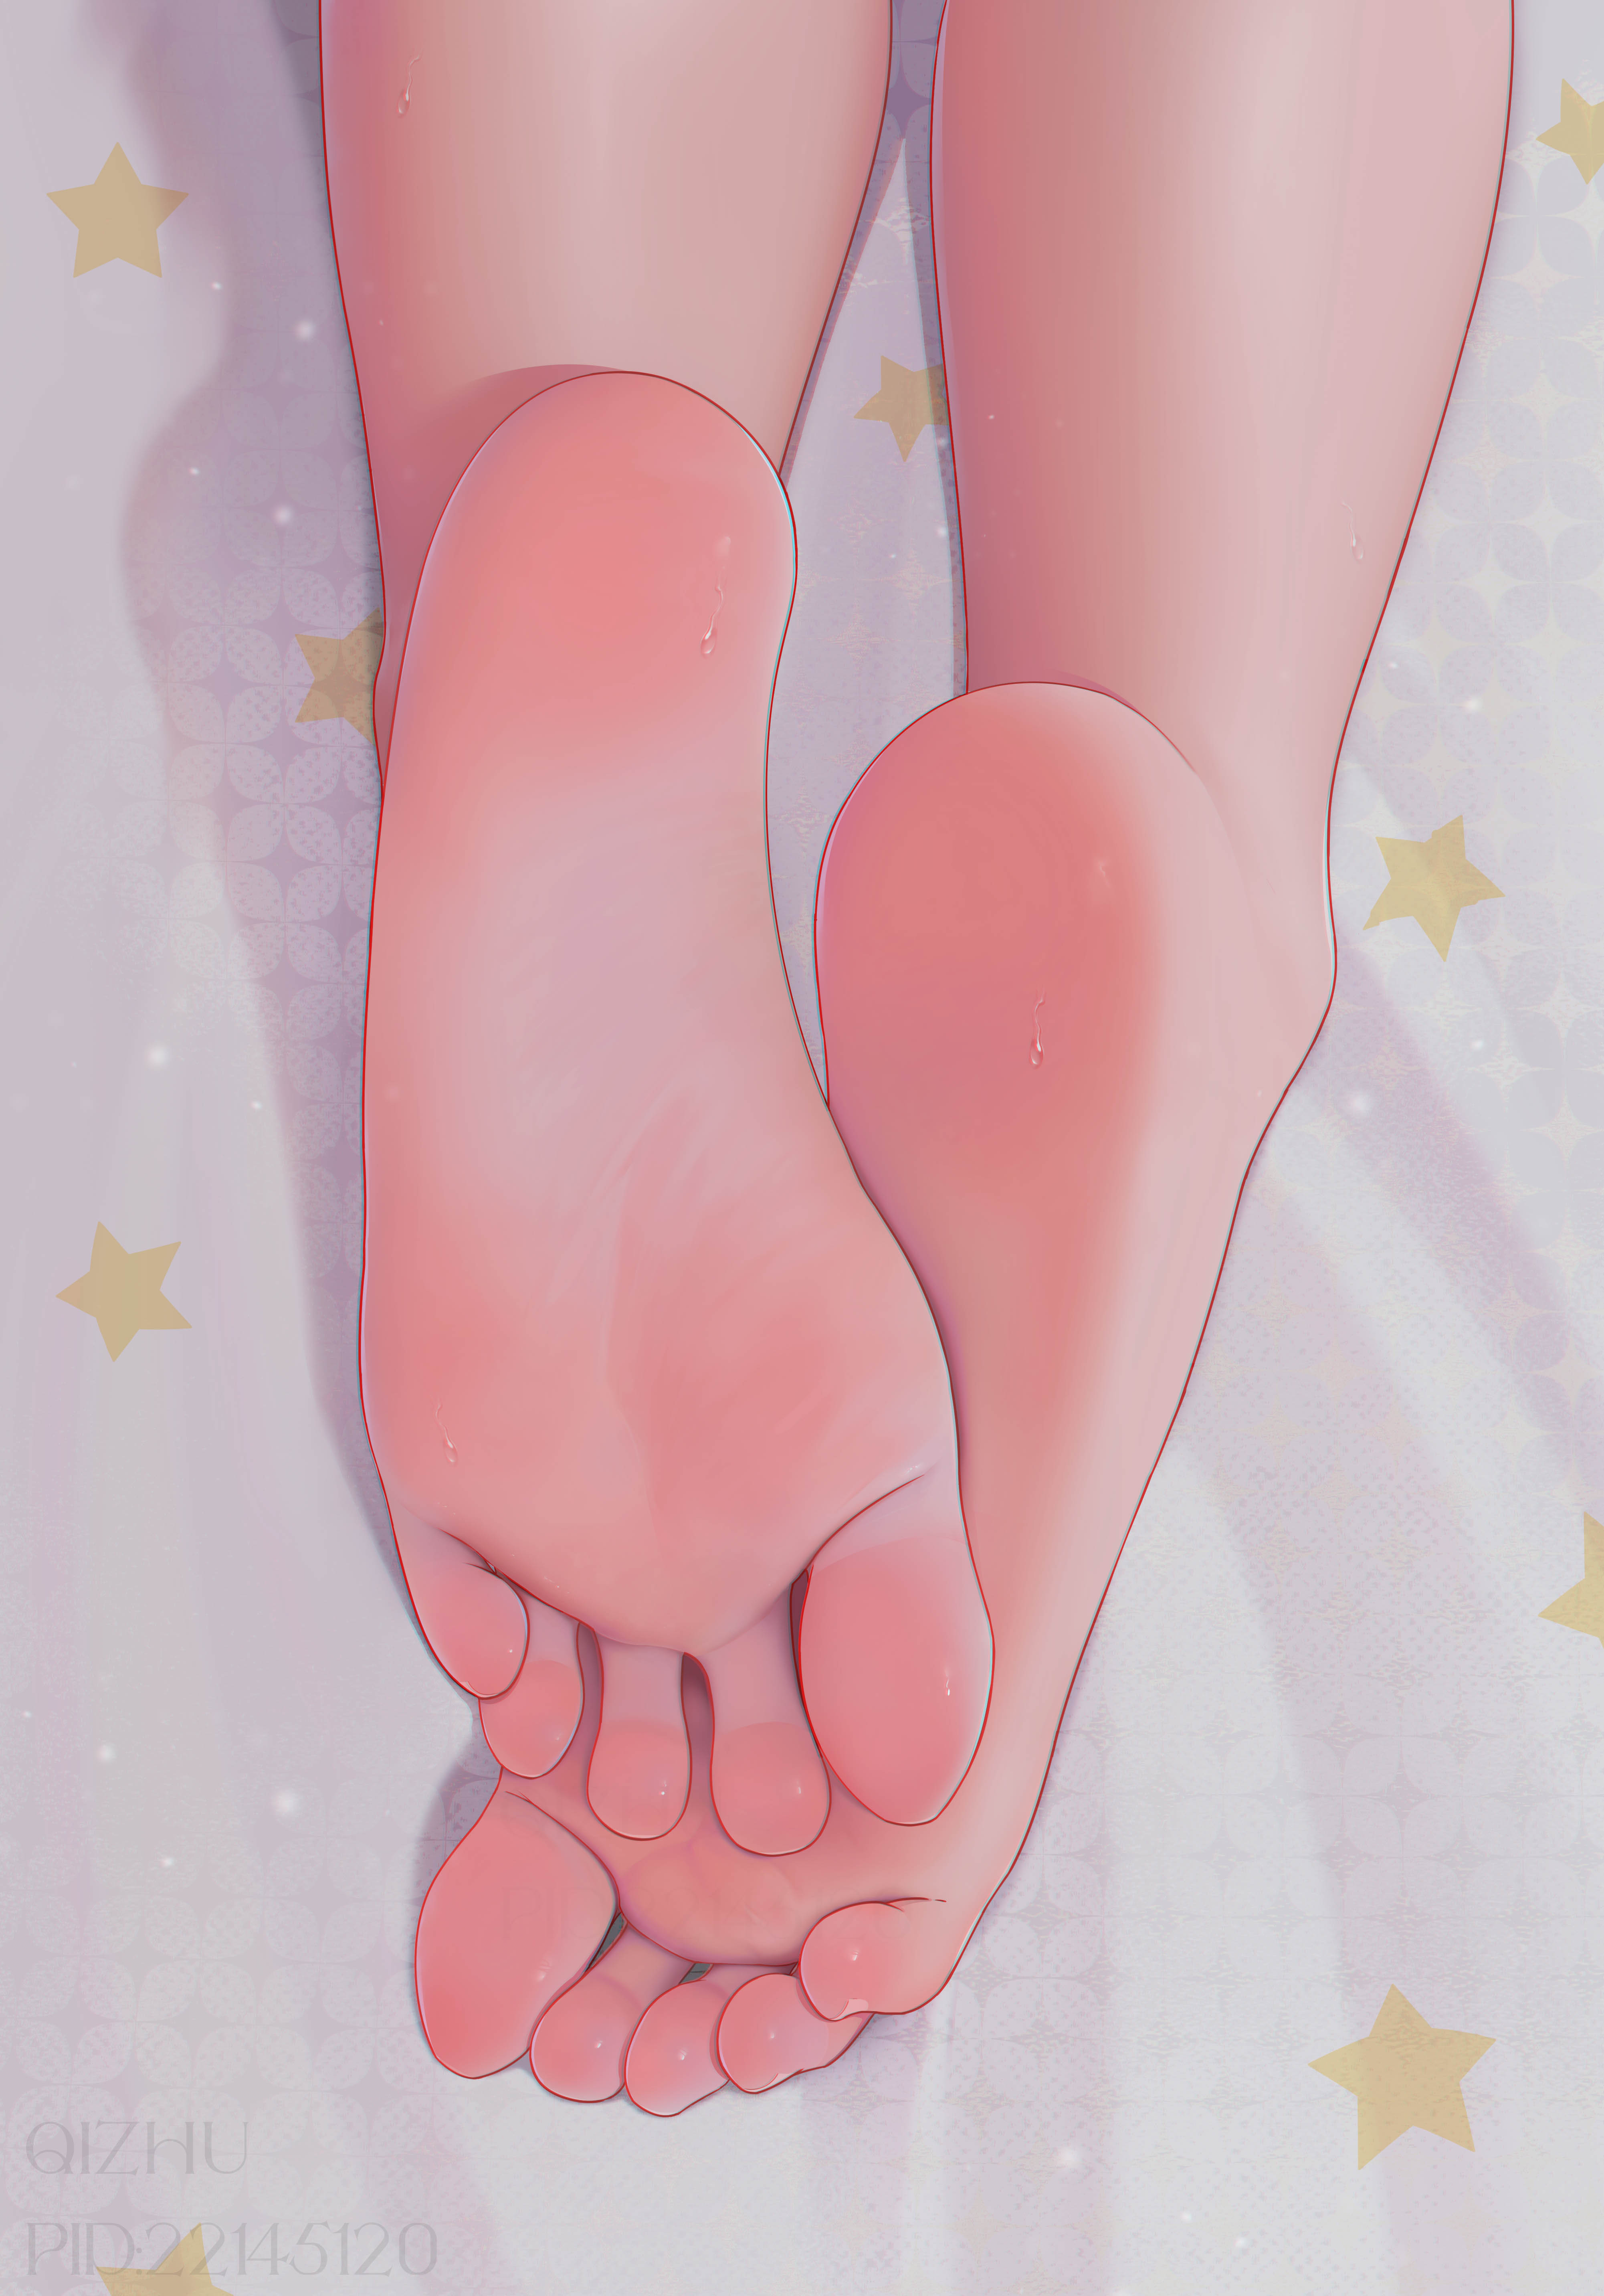 Anime 4002x5728 qizhu feet foot fetishism legs foot sole toes closeup blushing women stars portrait display